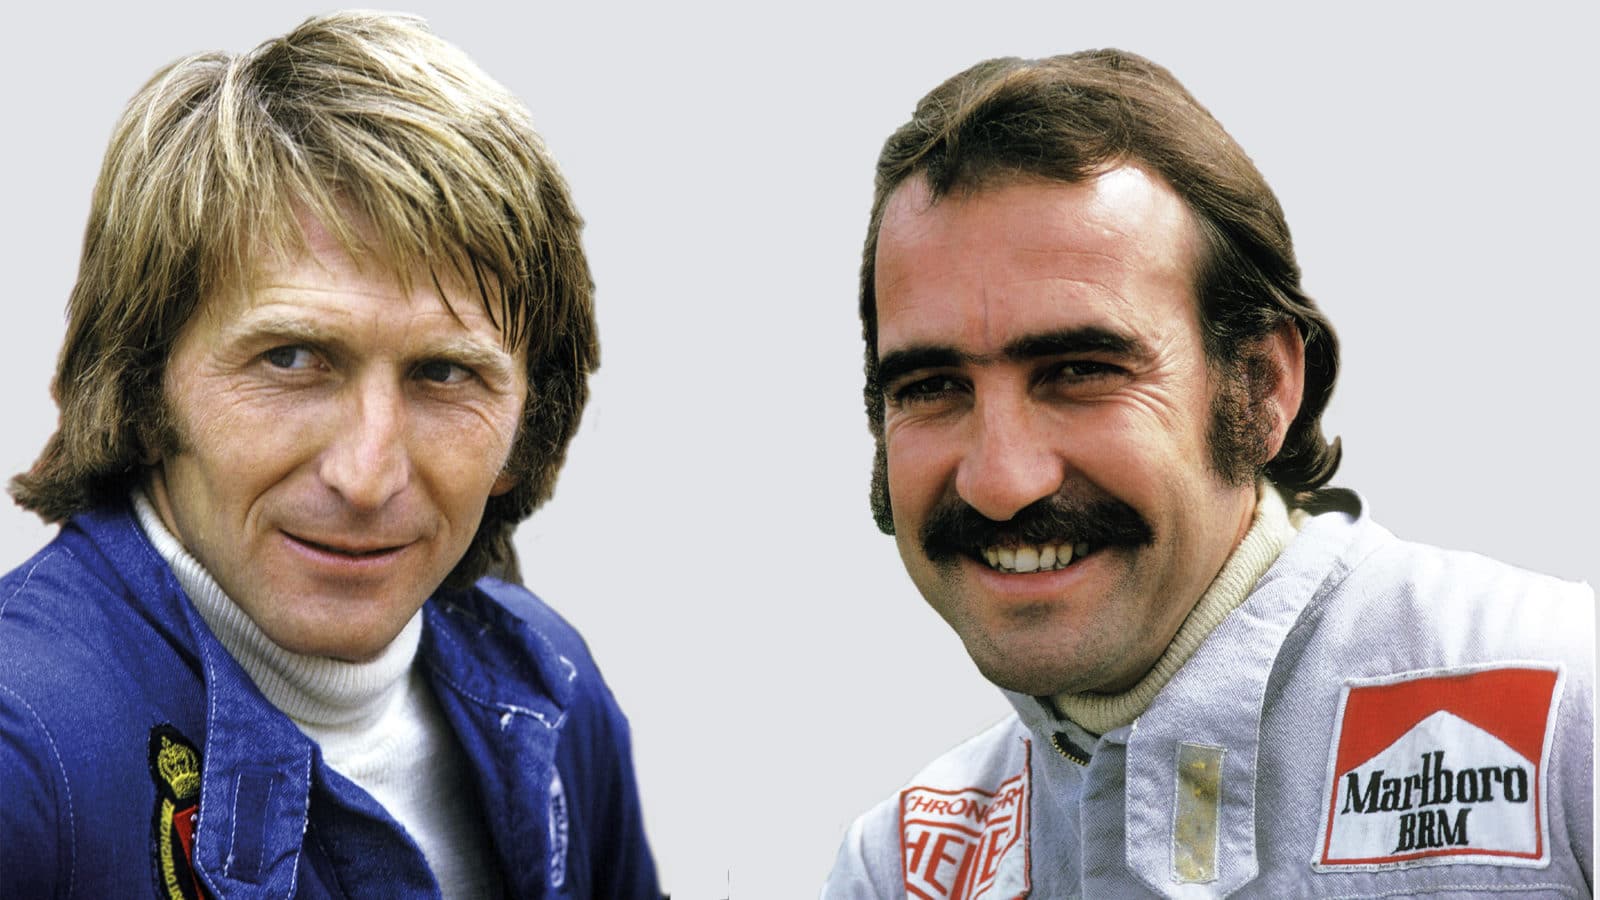 Derek Bell and Clay Regazzoni